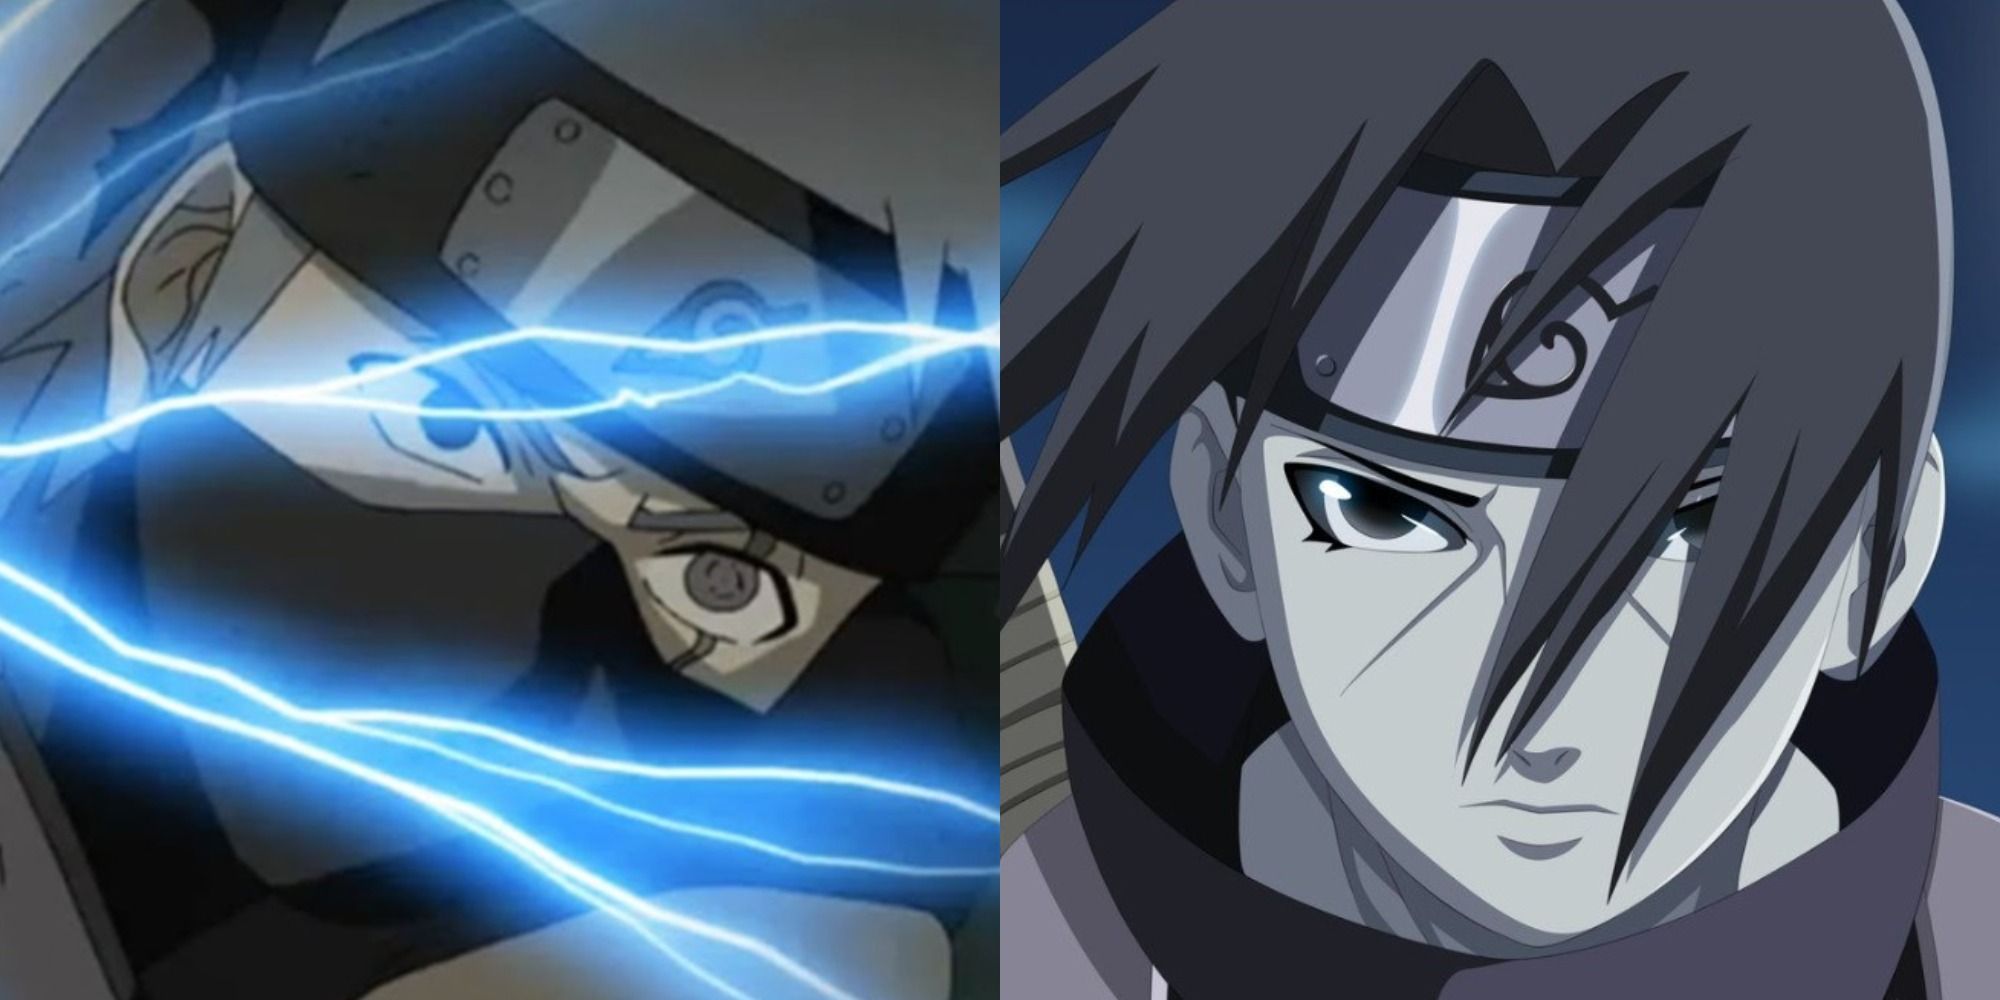 Kakashi Hatake and Itachi Uchiha in a split image from Naruto